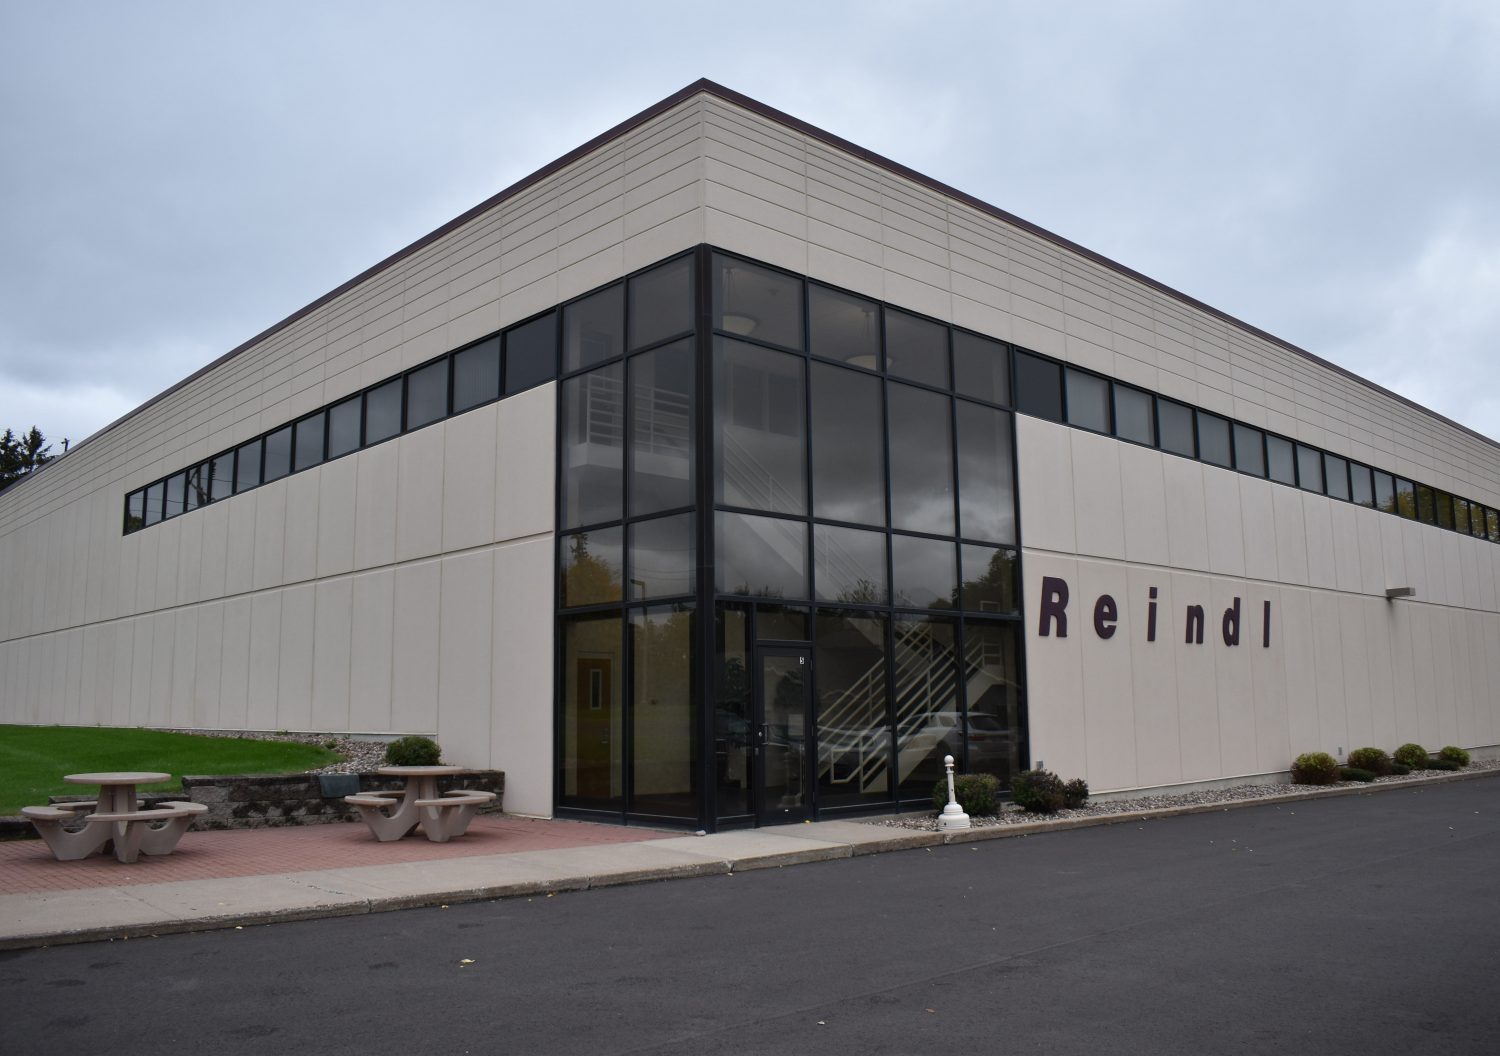 Reindl Printing Inc. celebrates 40 years of service